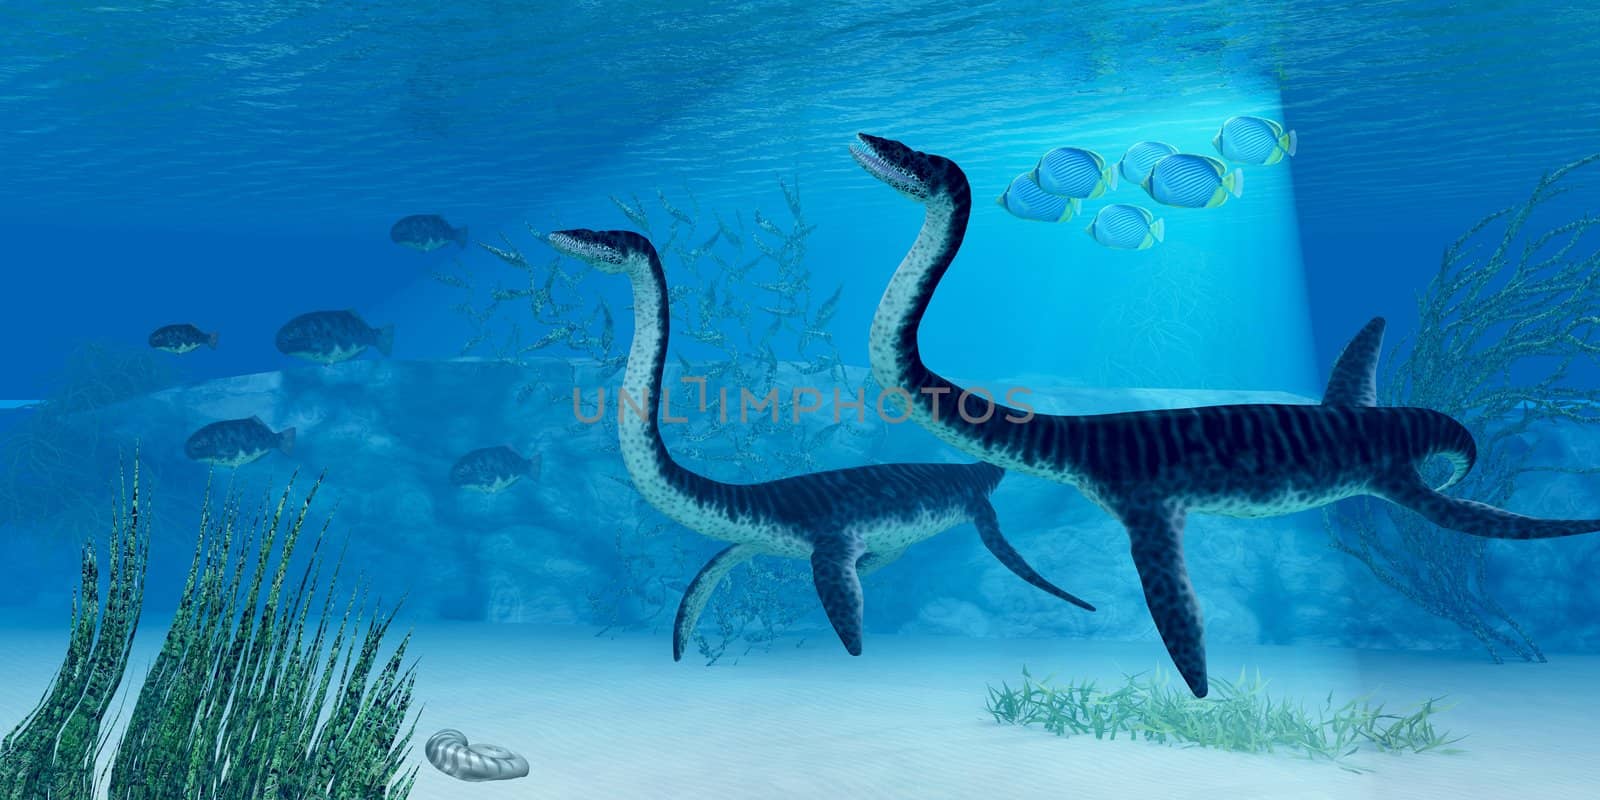 Jurassic seas were full of life such as the Plesiosaurus dinosaur which was a carnivorve feeding on fish prey.